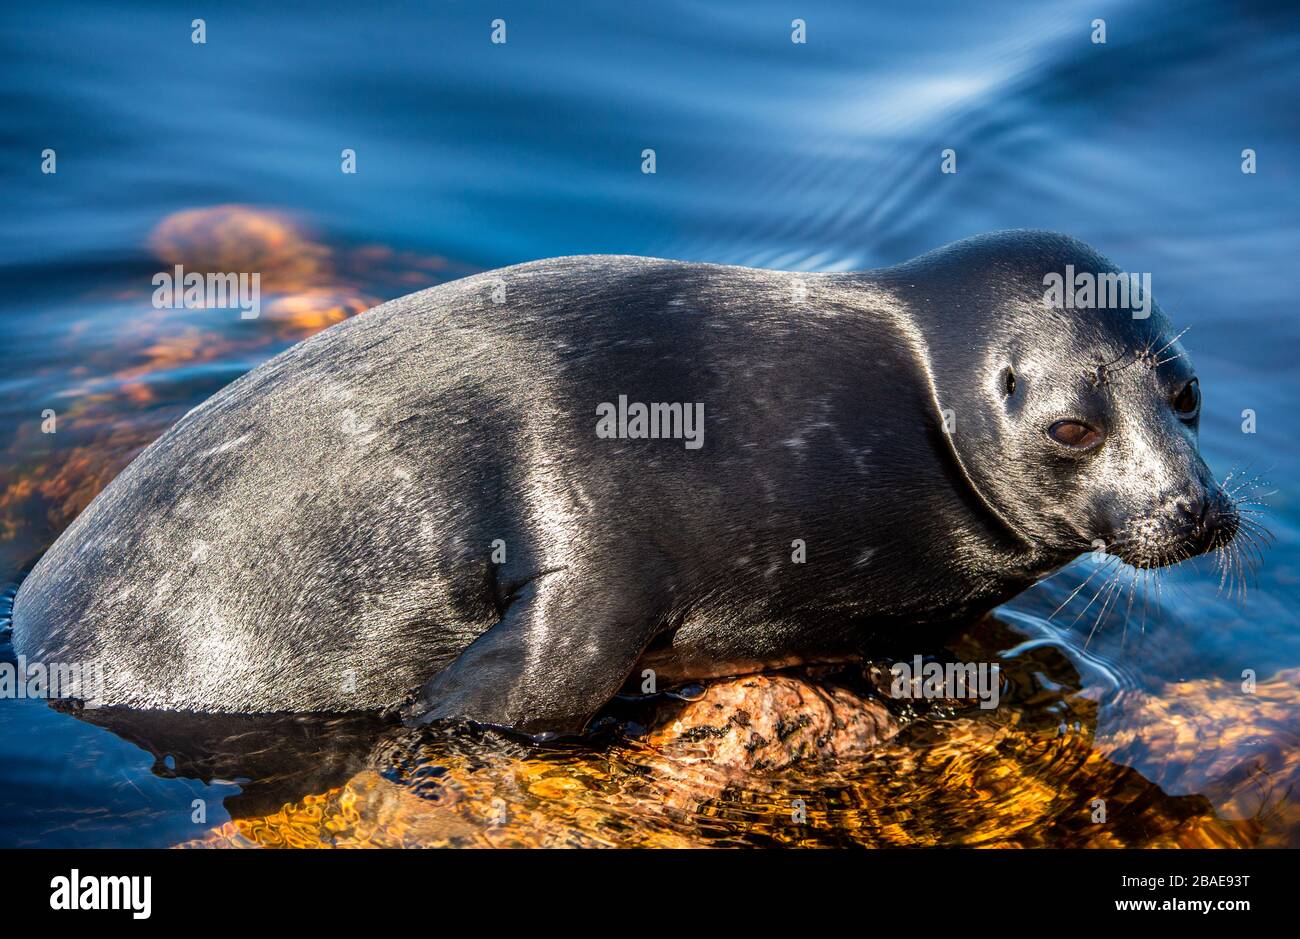 The Ladoga ringed seal resting on a stone. Scientific name: Pusa hispida ladogensis. The Ladoga seal in a natural habitat. Ladoga Lake. Russia Stock Photo